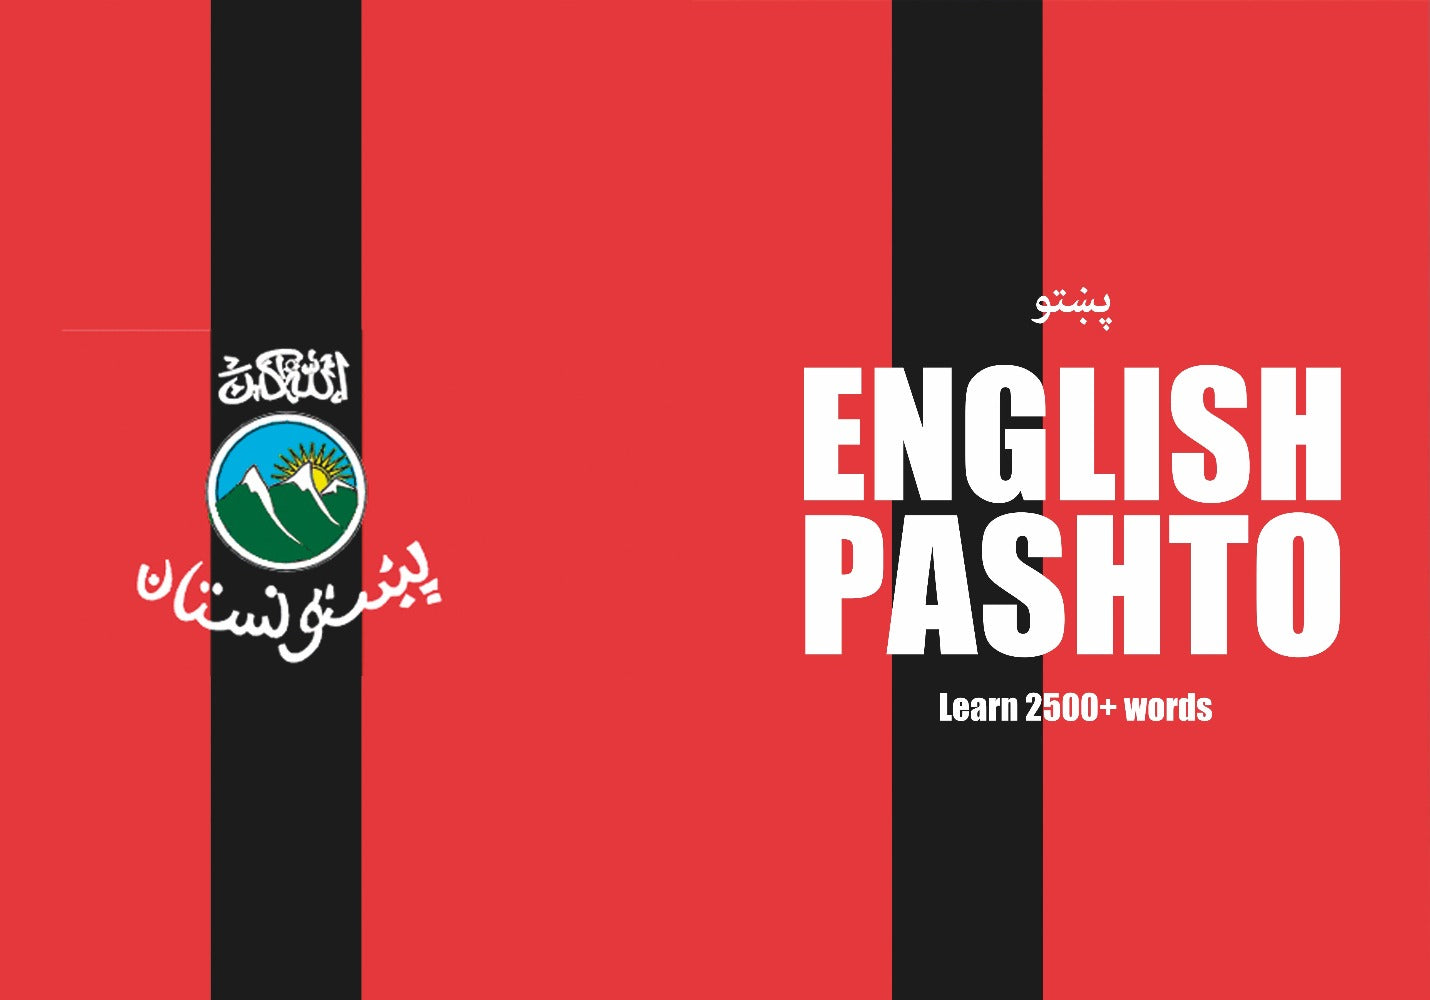 Pashto language learning notebook cover